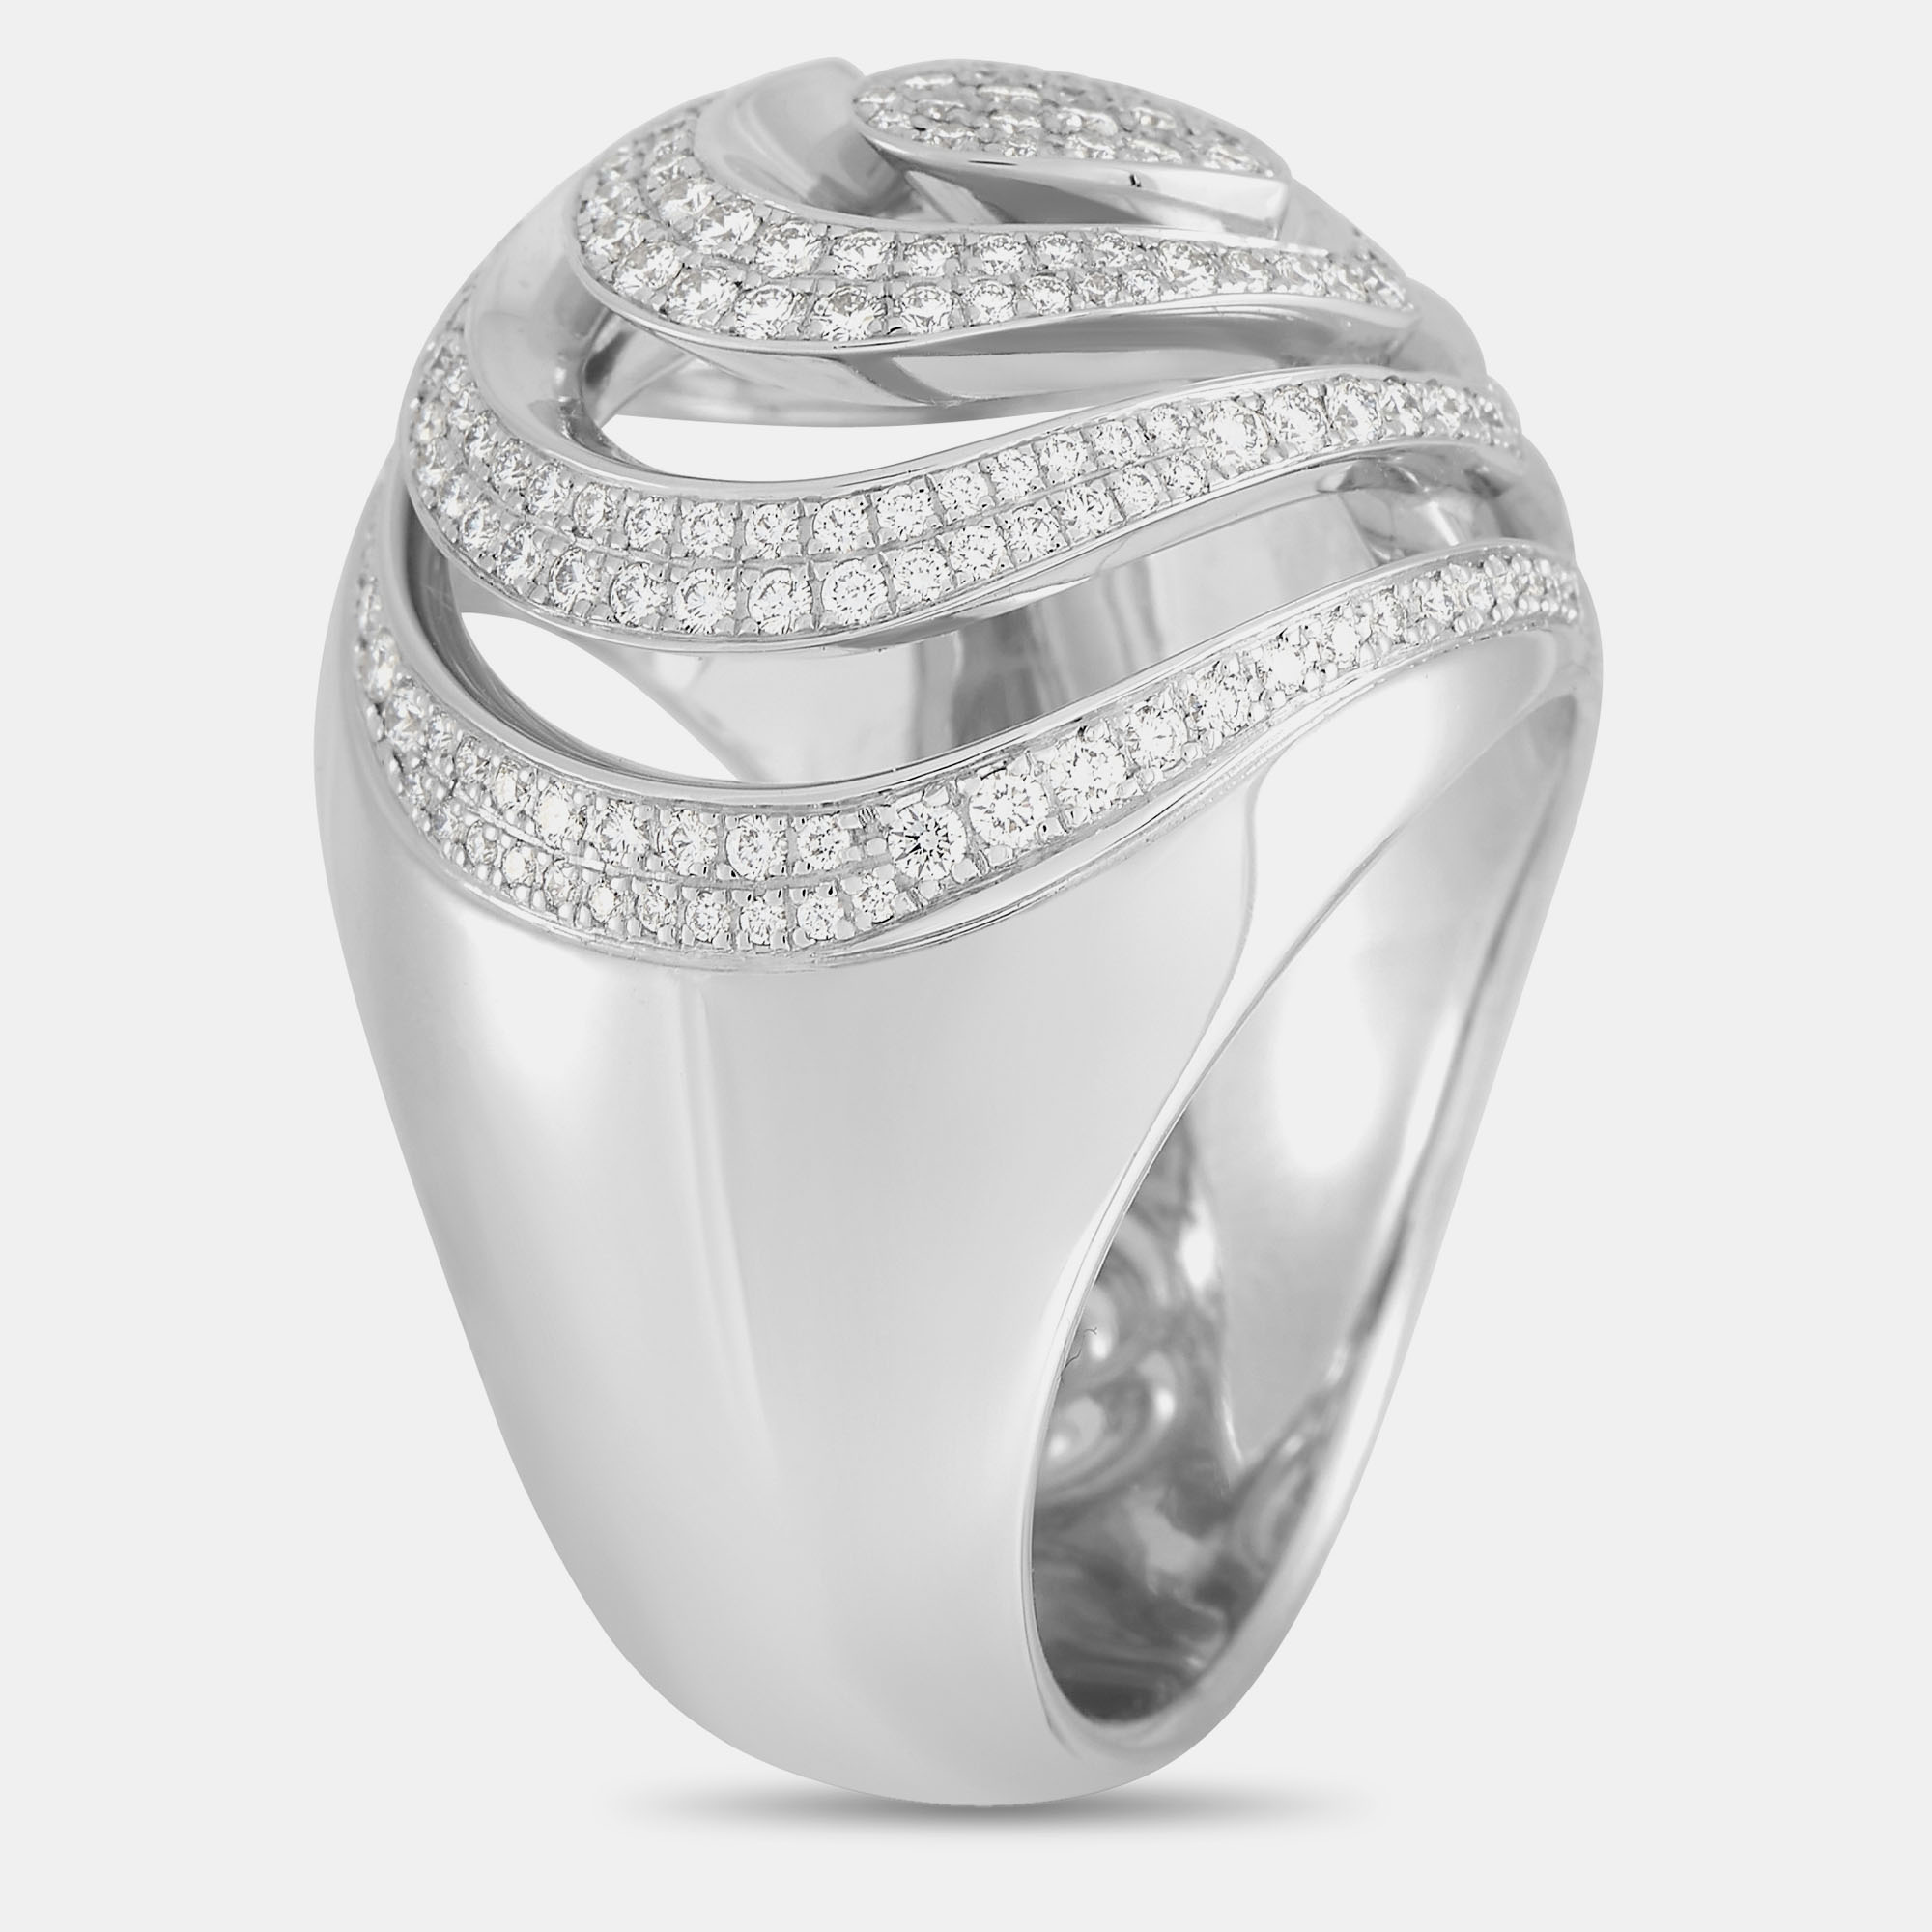 Chopard 18k white gold 1.17 ct diamond ring us 10